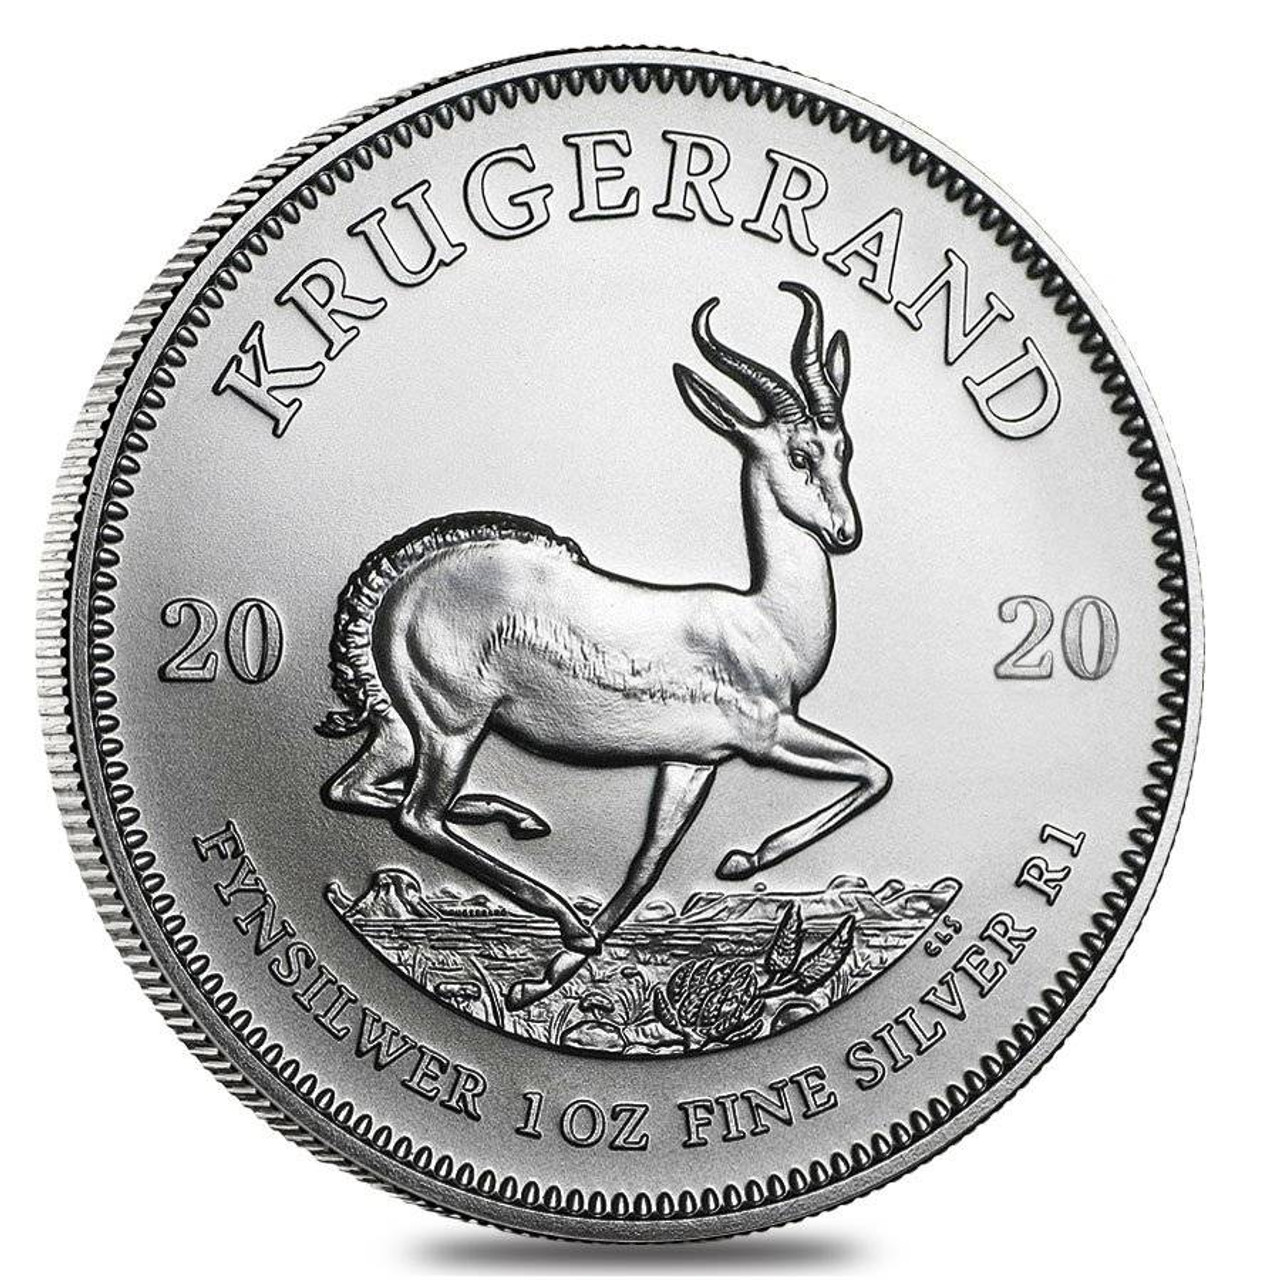 South Africa 1 oz Silver Coin, , Krugerrand BU, Paul Kruger, Antelope